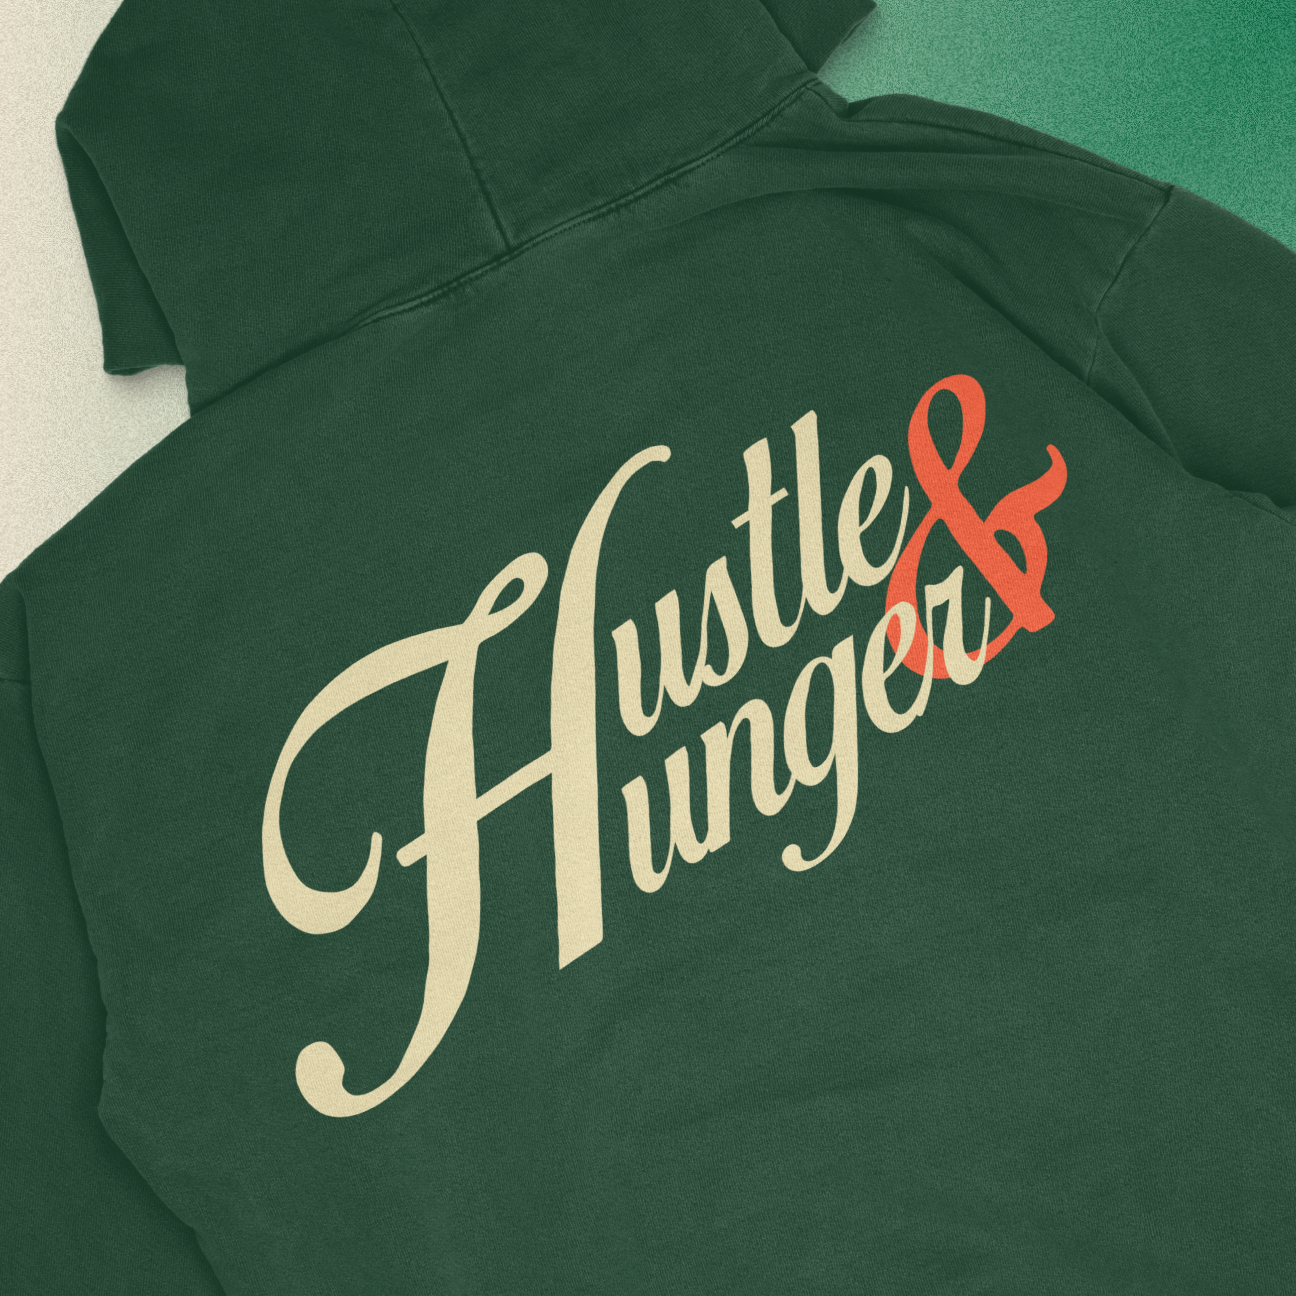 Hustle & Hunger Hoodie x P Sheff